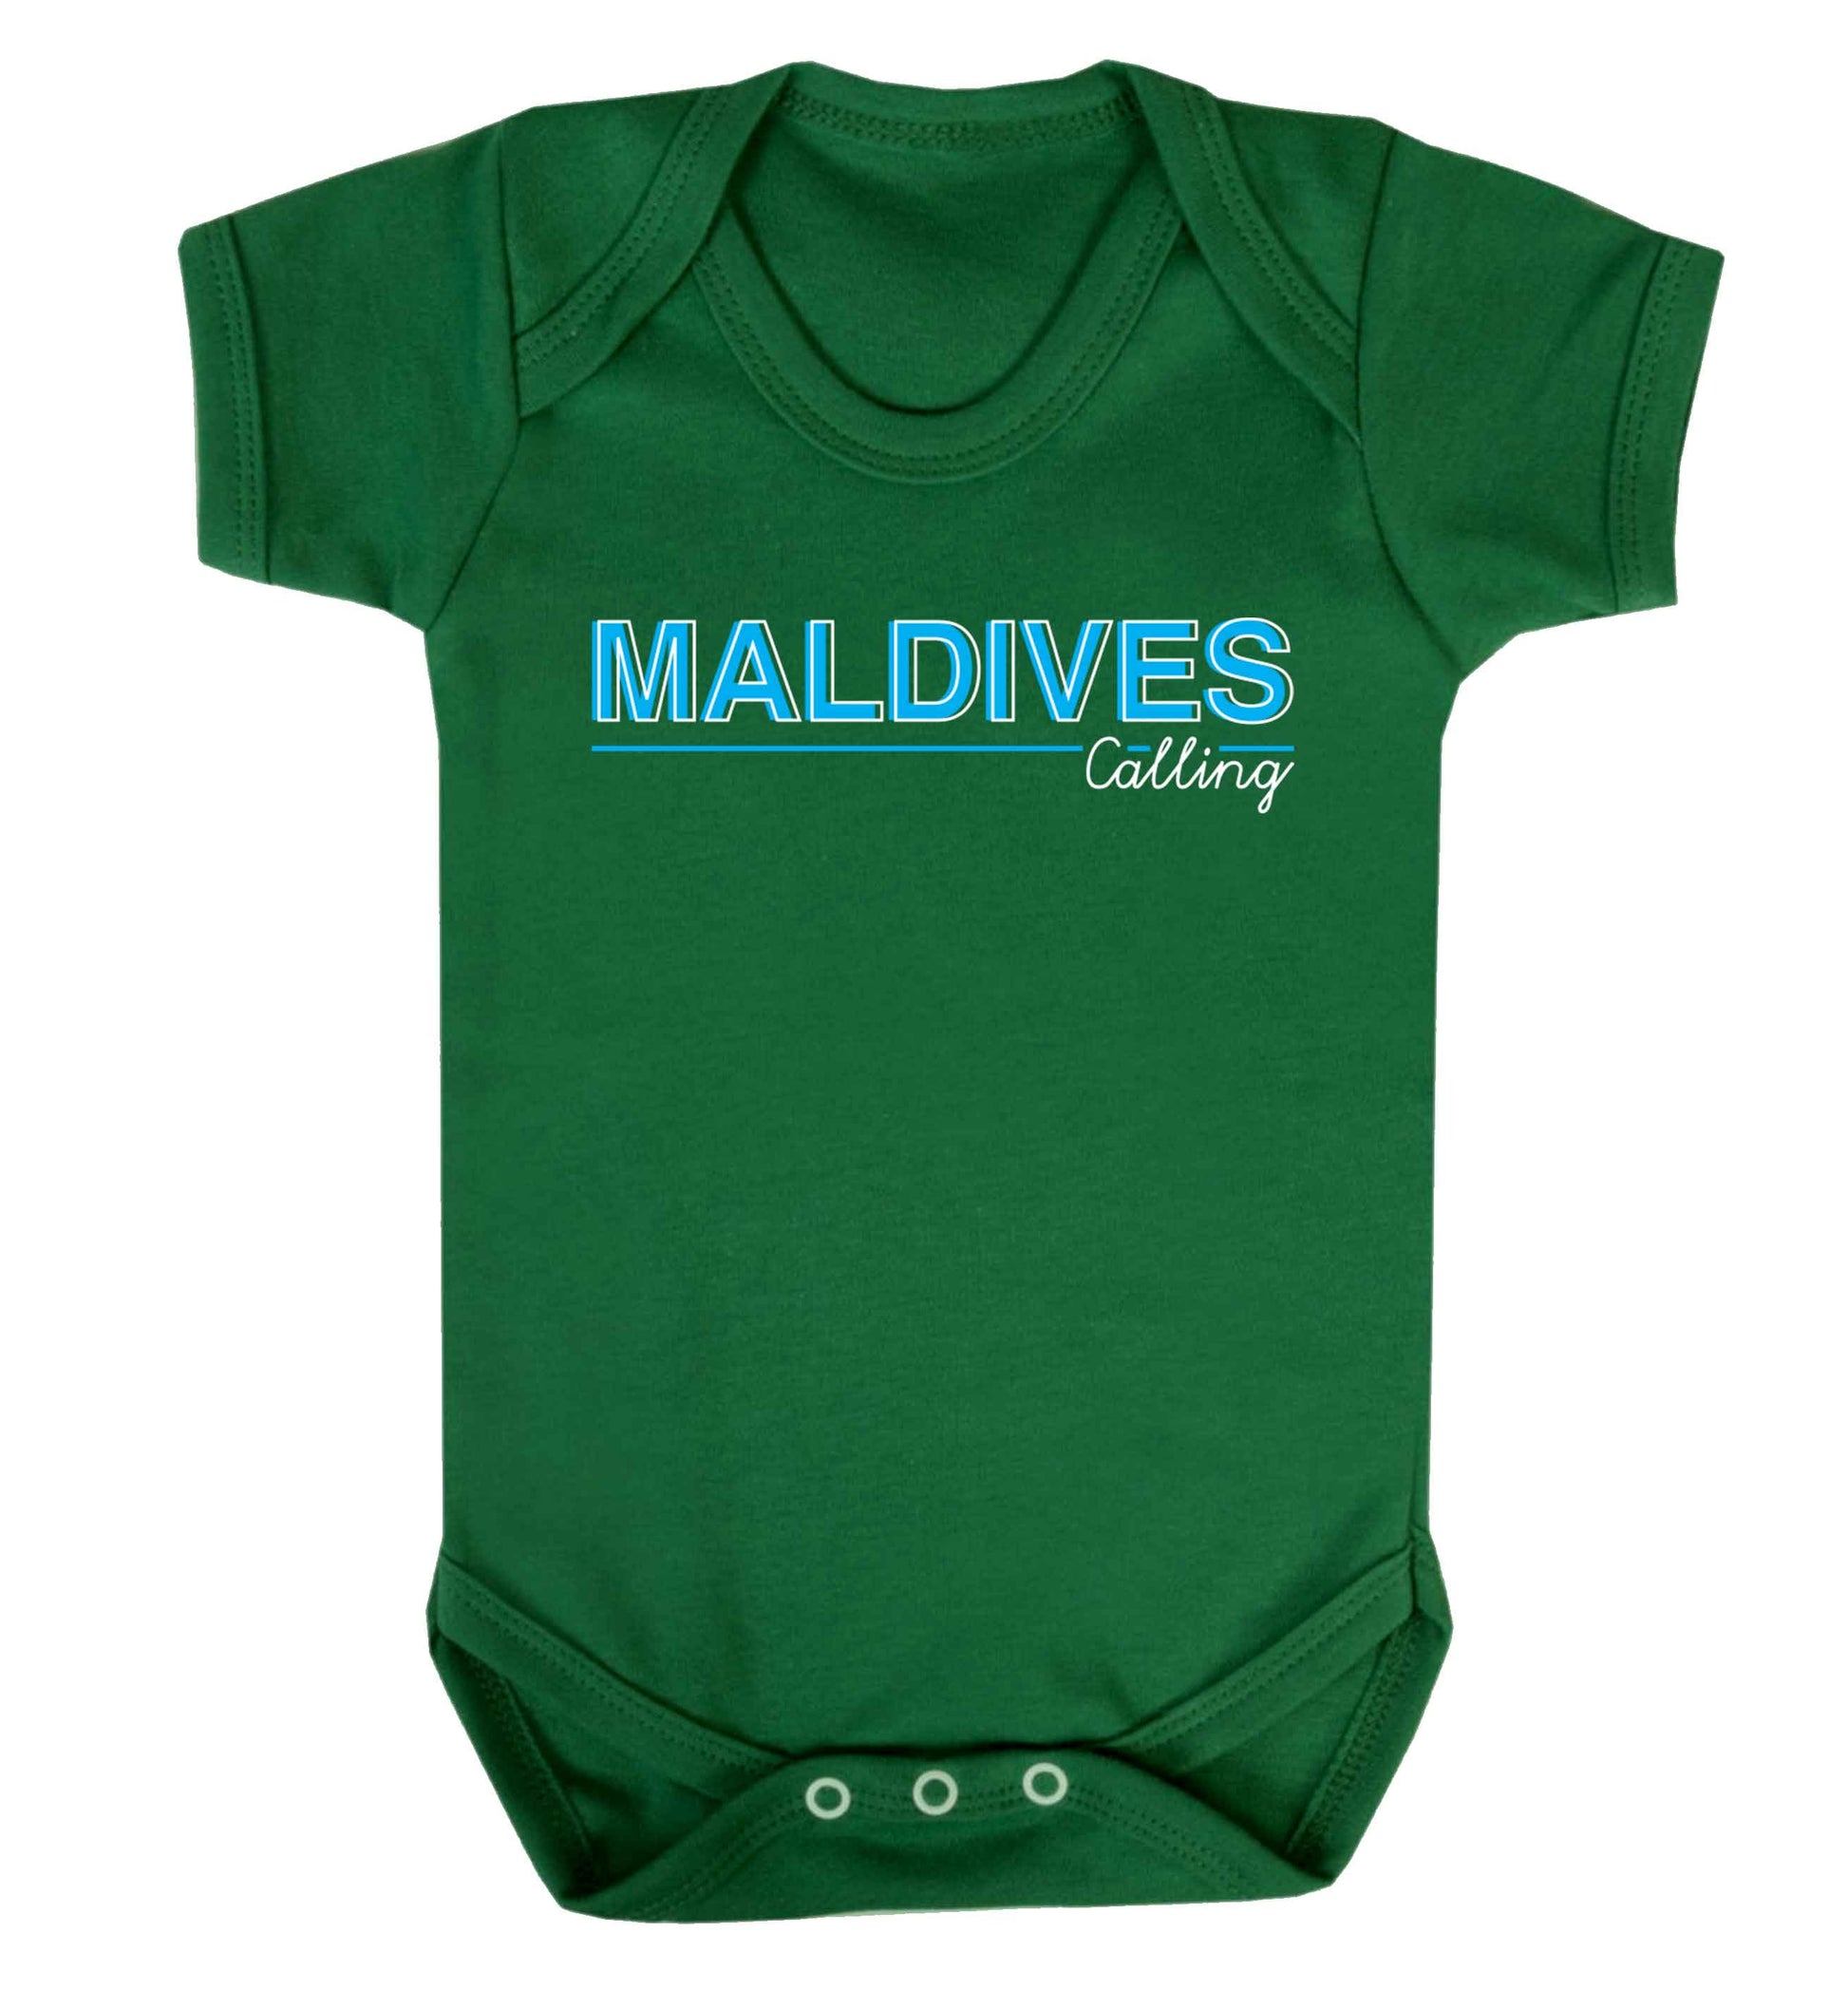 Maldives calling Baby Vest green 18-24 months